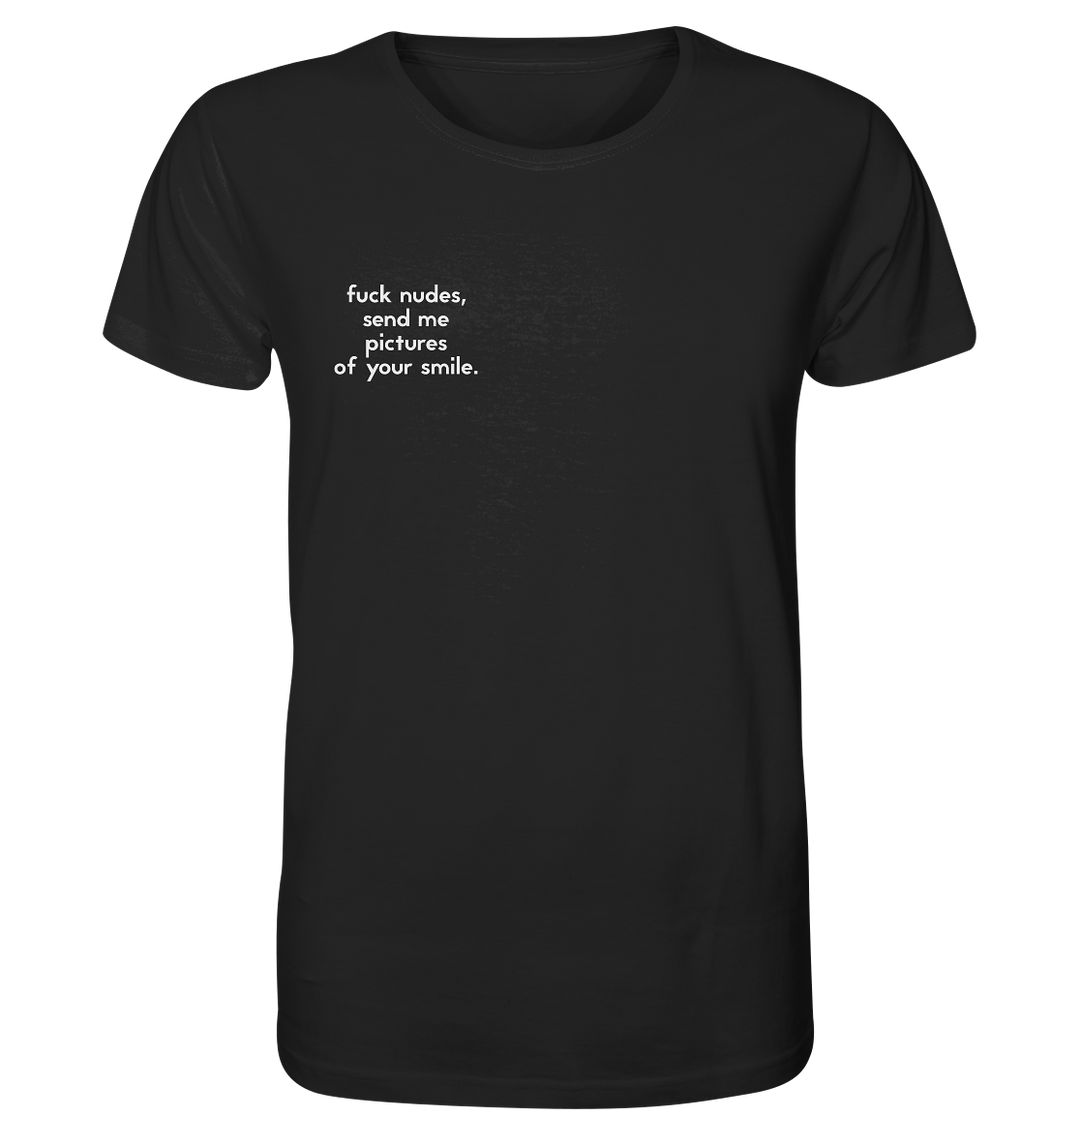 F**CK N**** send me your Smile Herren - Organic Shirt Black Herren Shirt Organic Shirt True Statement